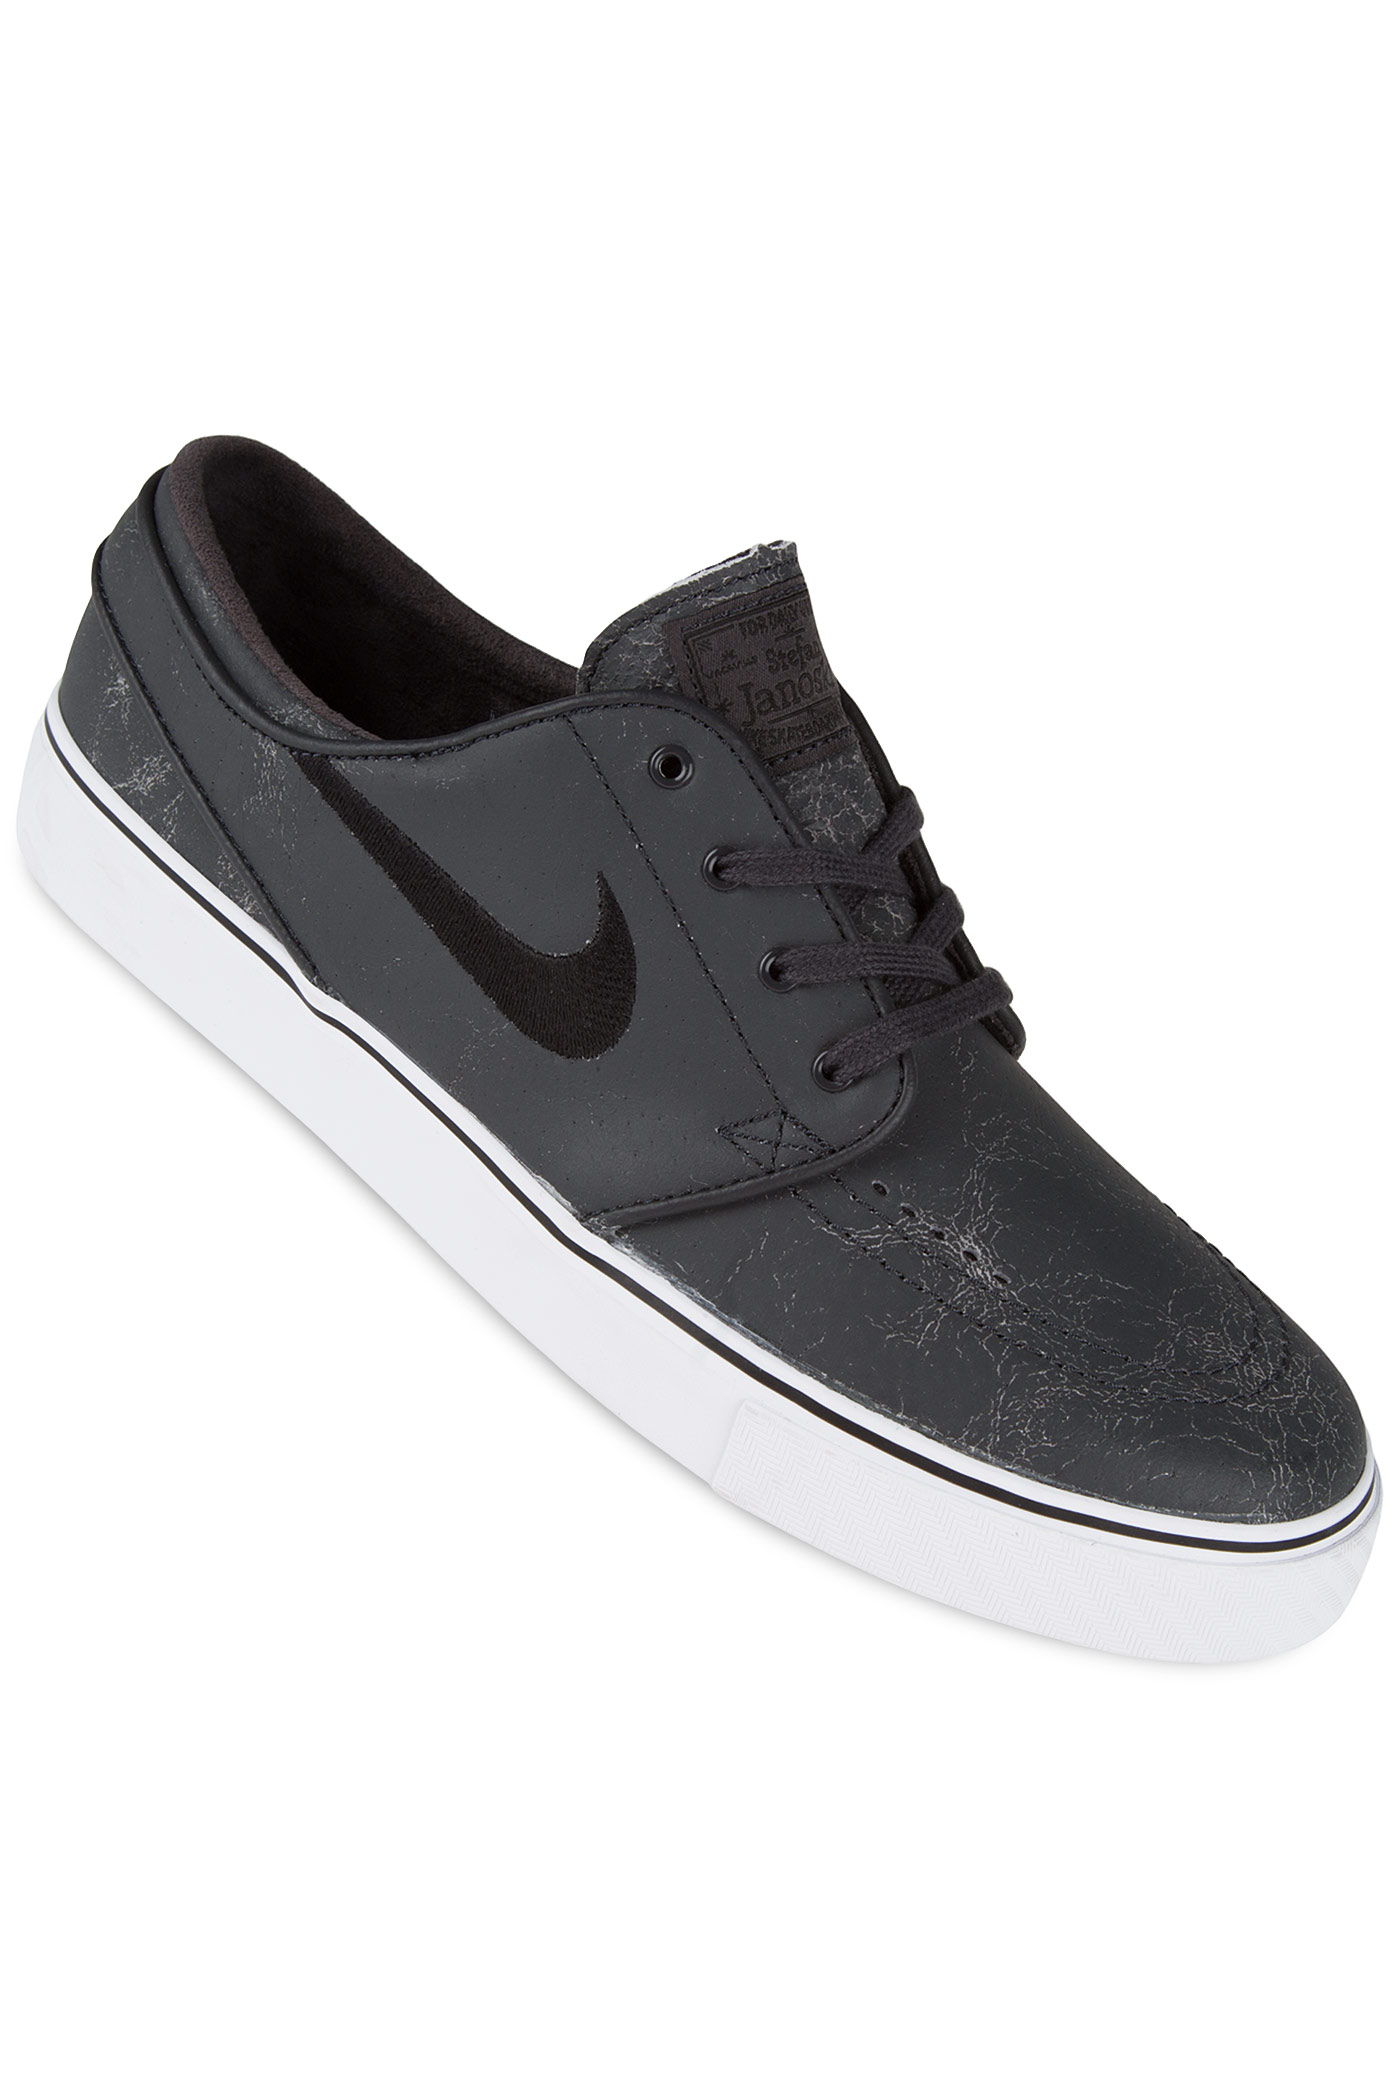 Nike SB Zoom Stefan Janoski Elite Shoe (anthracite black) buy at ...